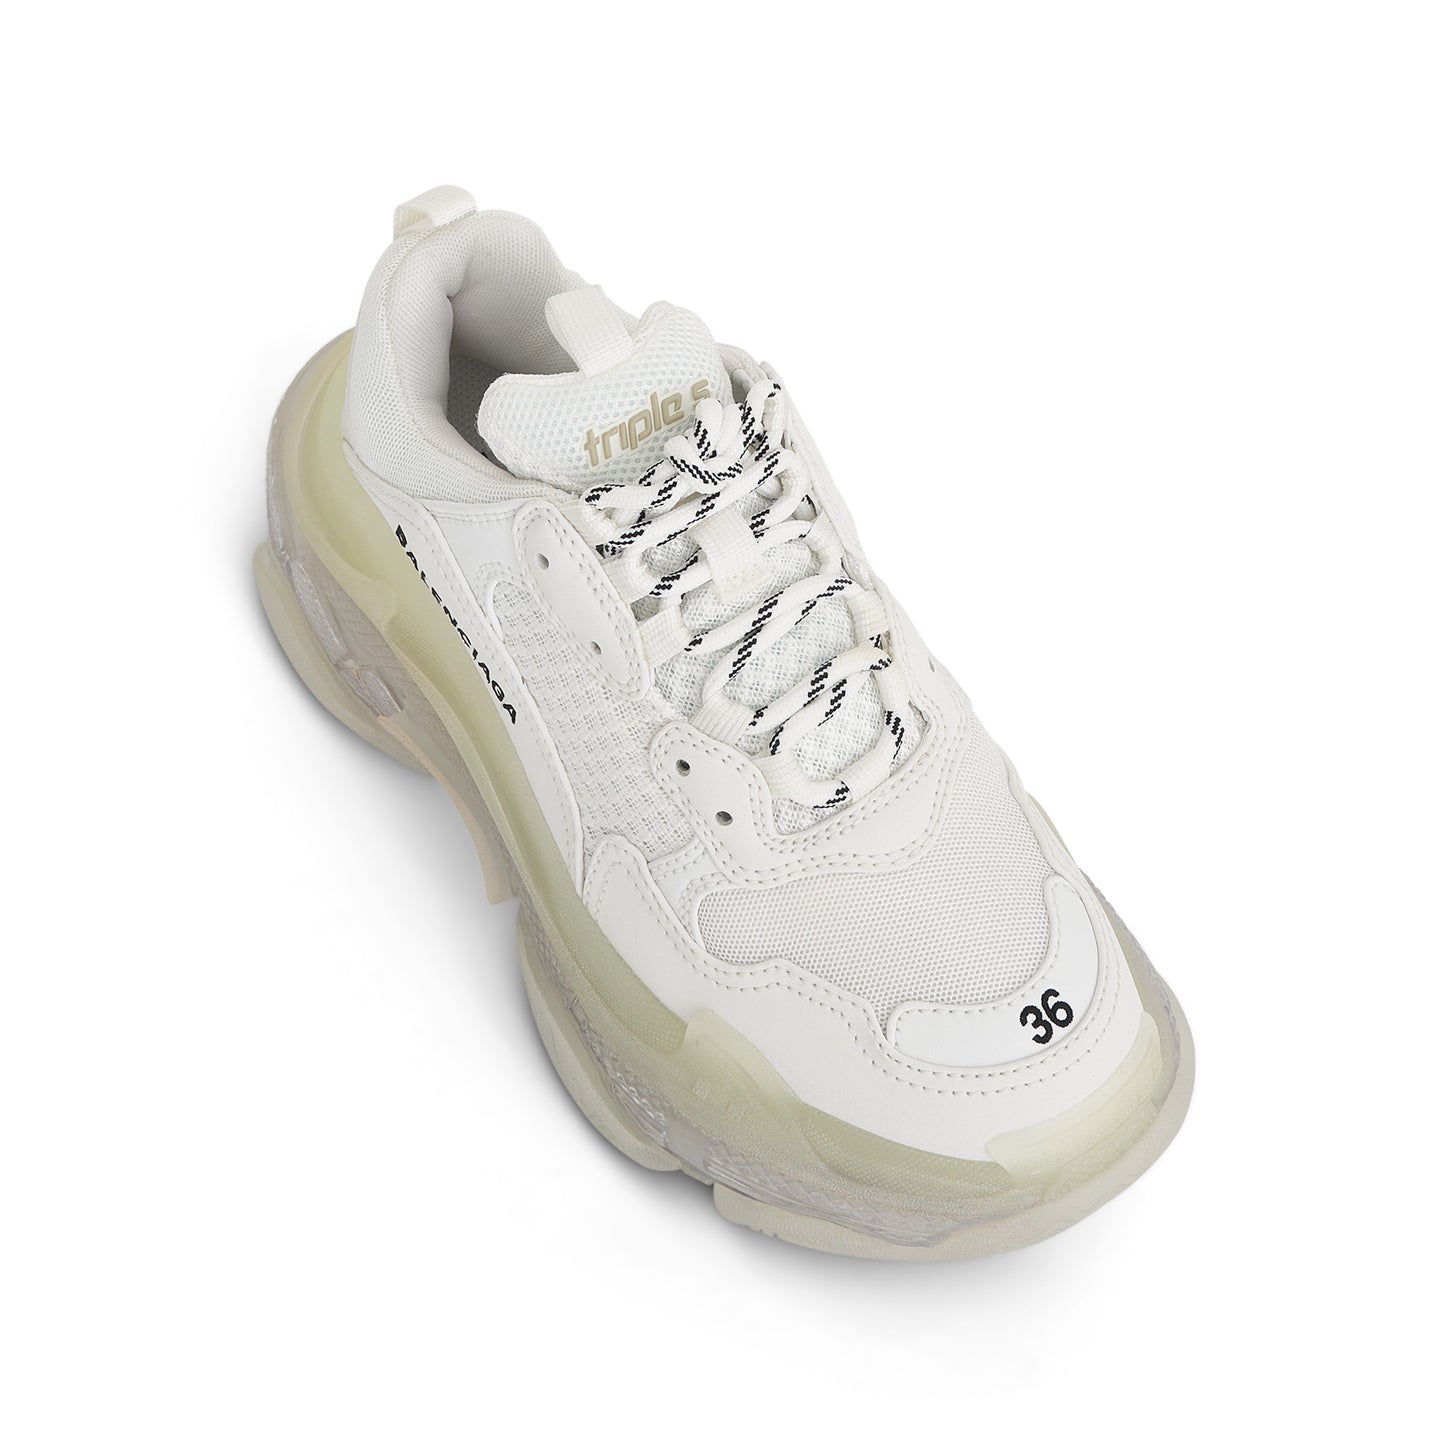 Triple S Clear Sole Sneakers in White